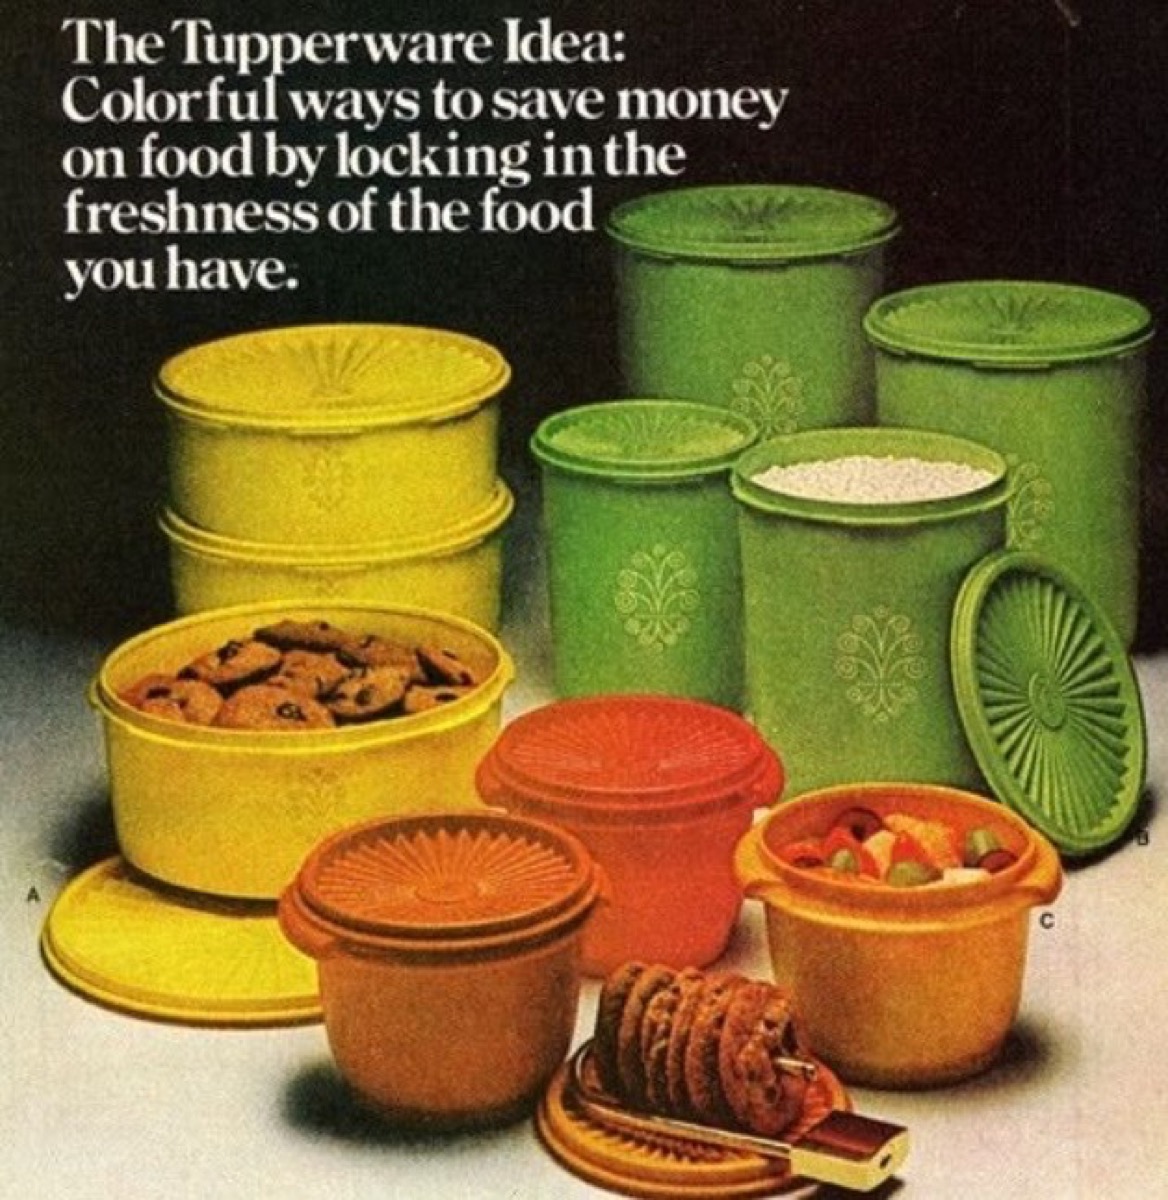 1970s-colorful-tupperware-ad